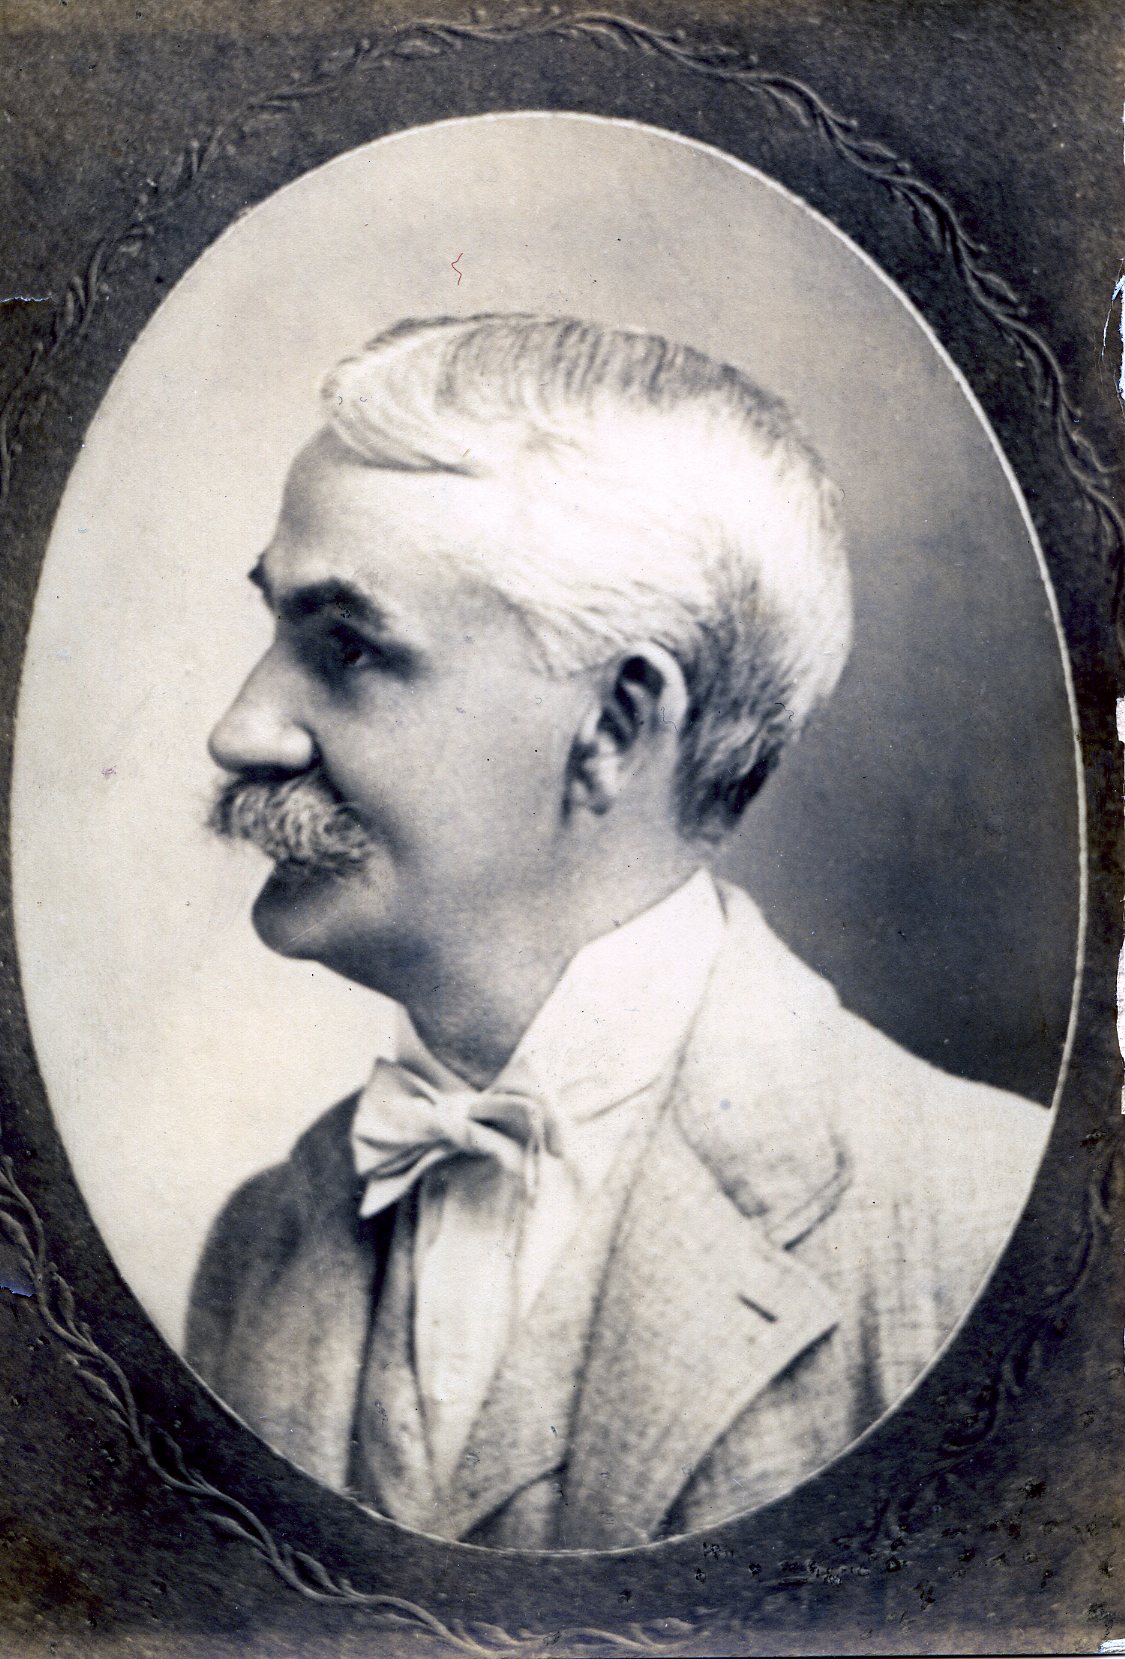 Member portrait of William H. Butterworth